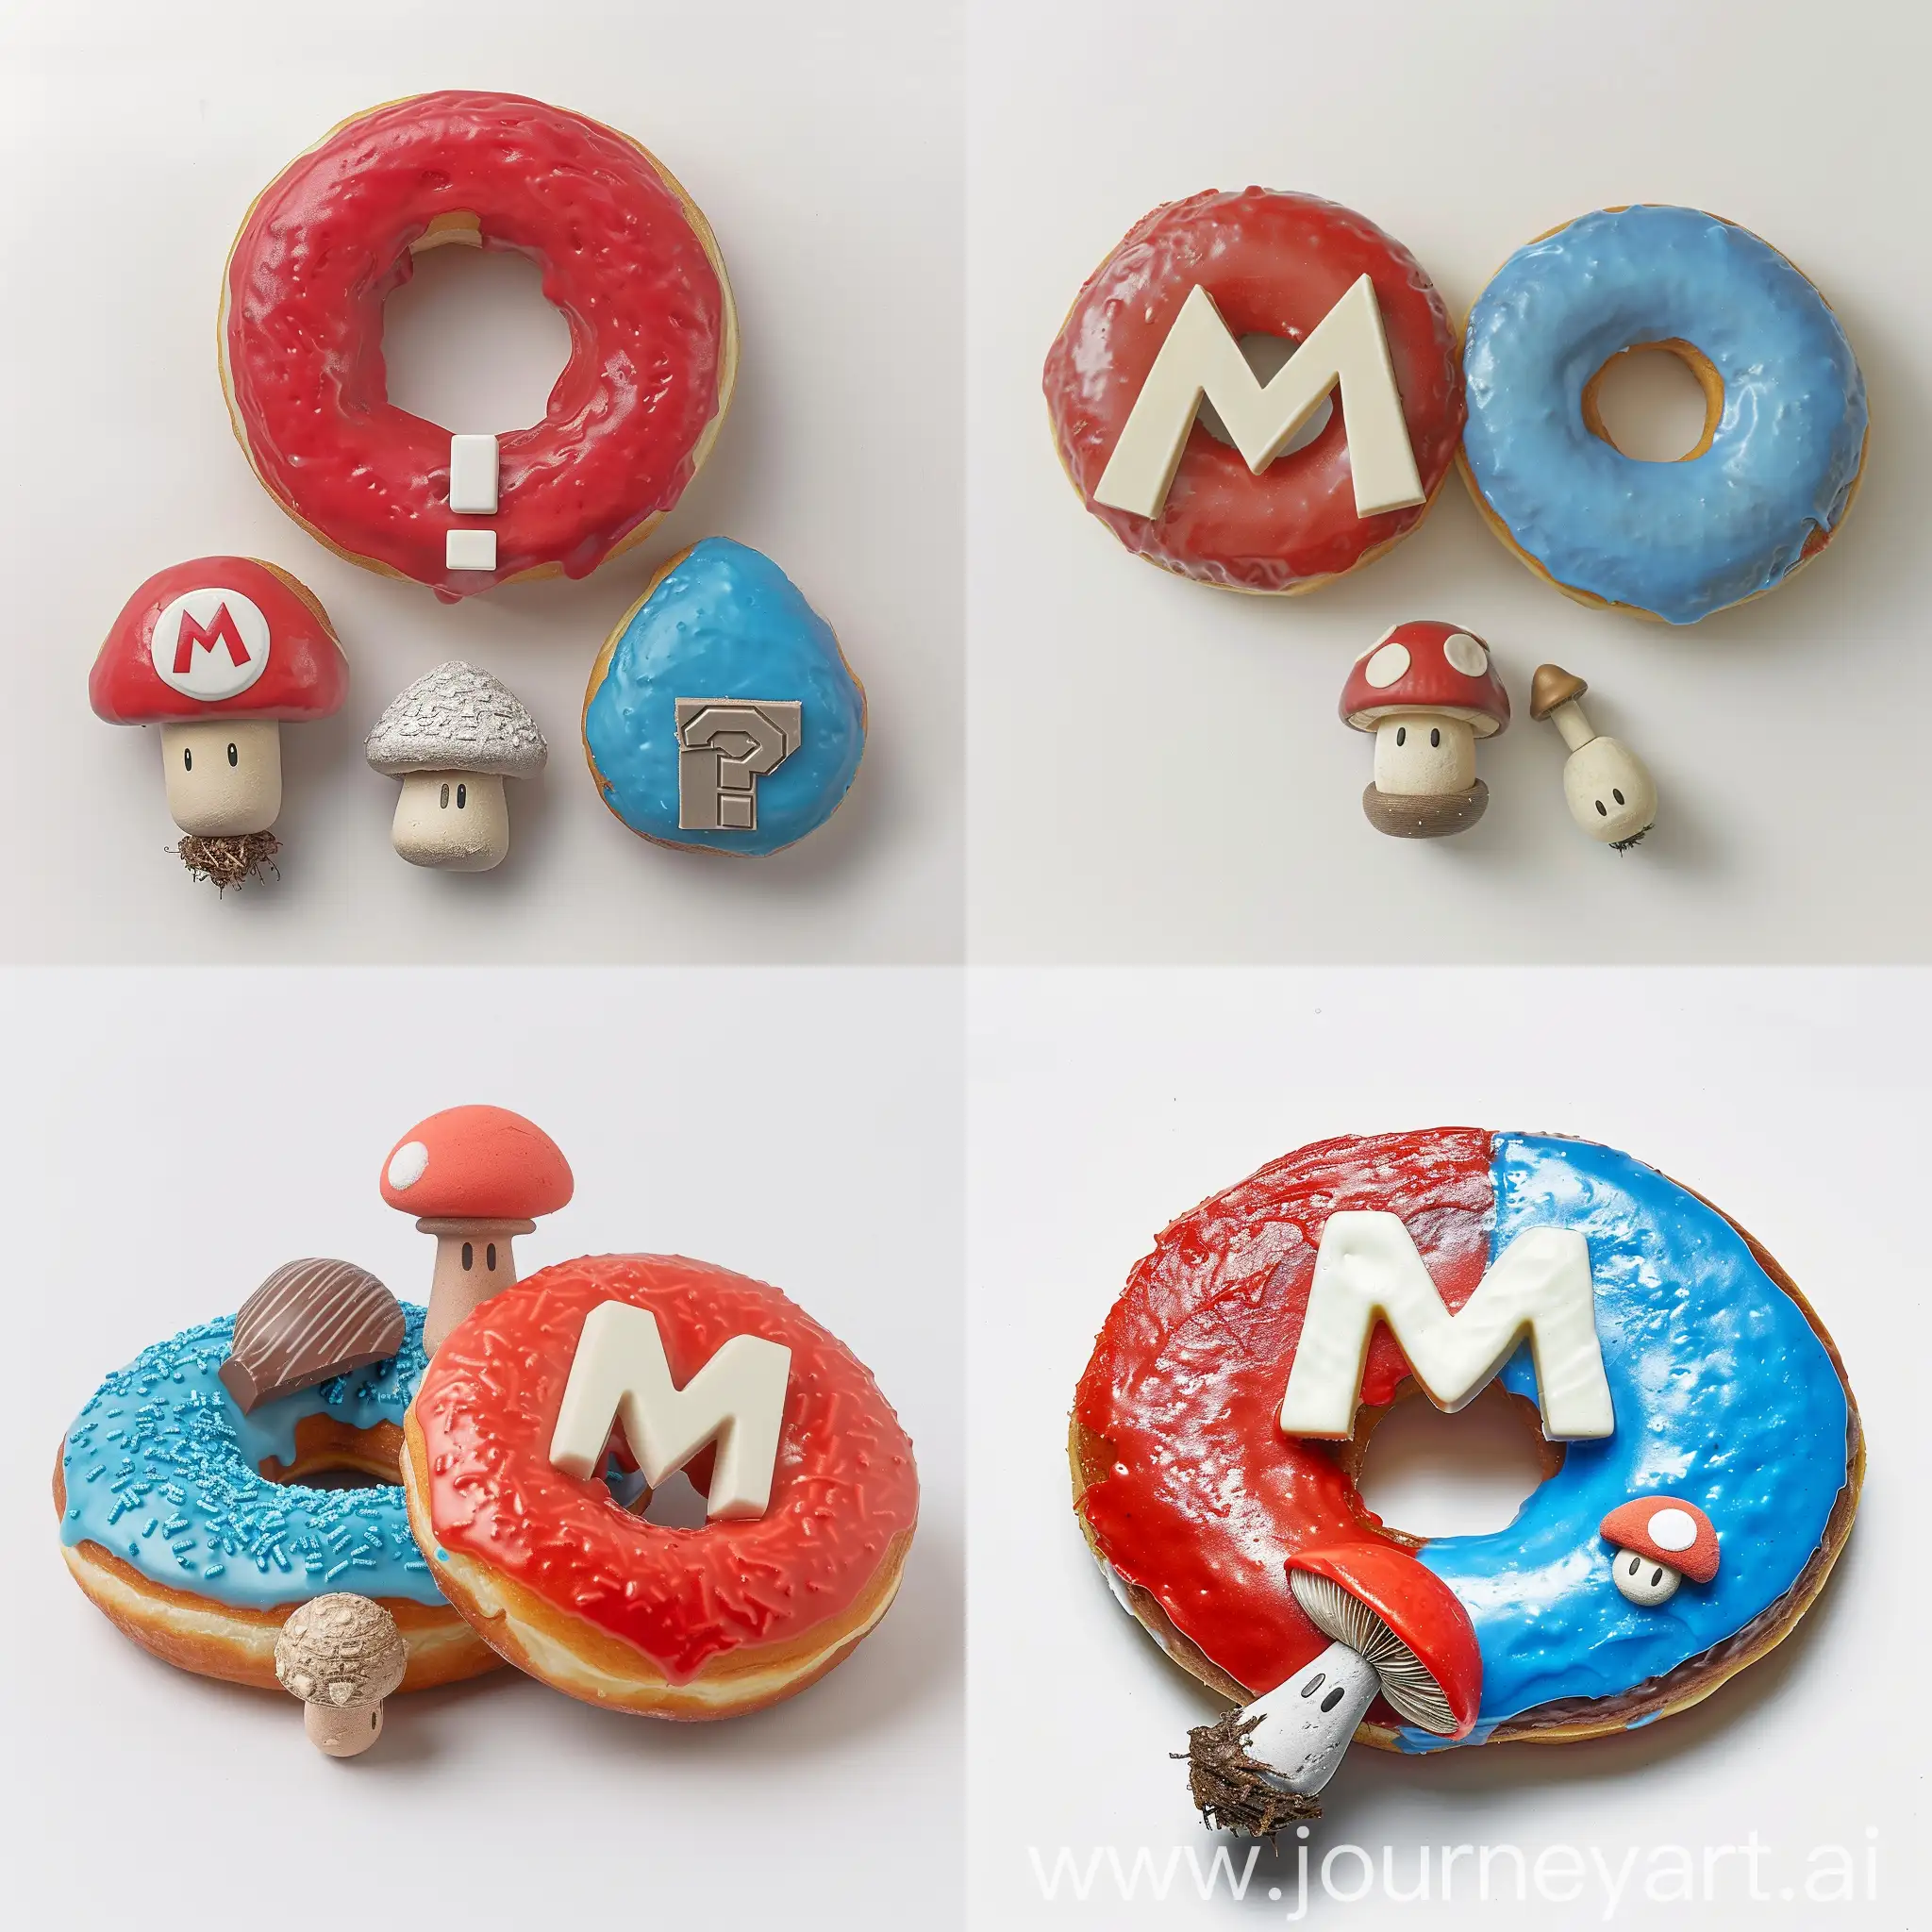 Colorful-DualTone-Doughnut-with-Mario-Mushroom-and-Chocolate-M